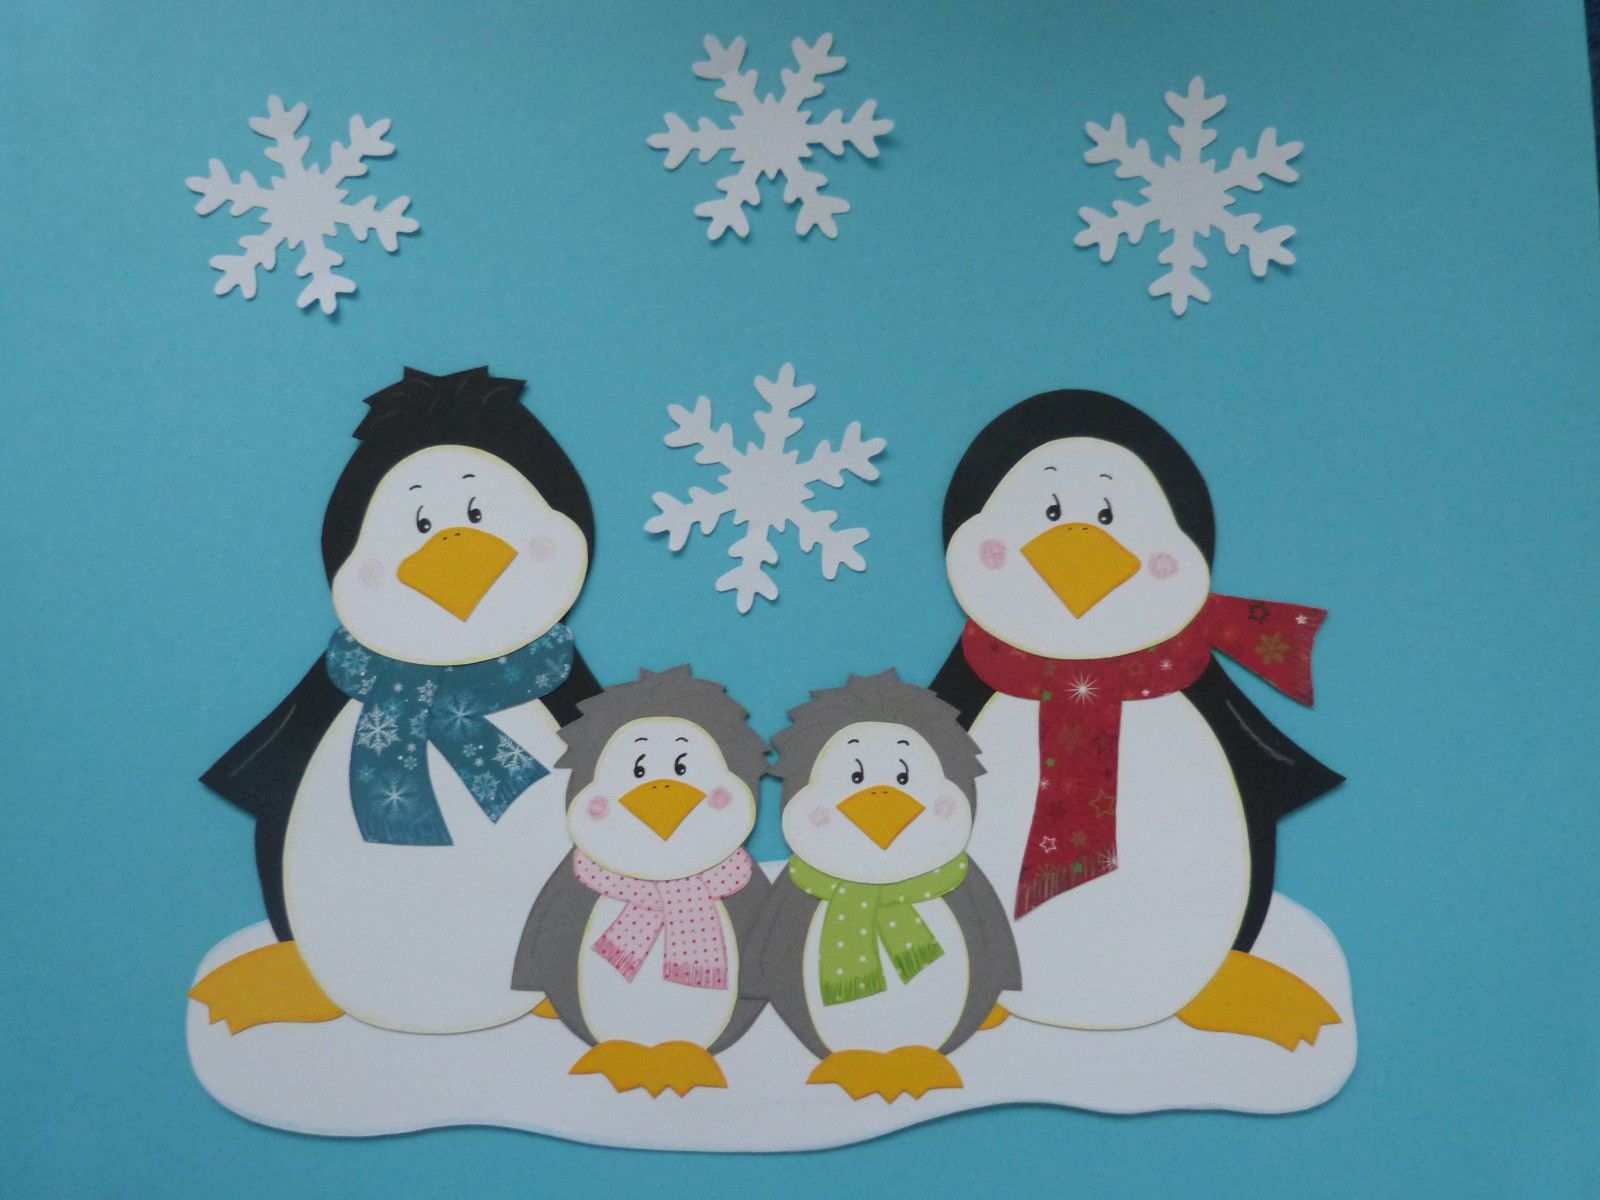 Fensterbilder Tonkarton Familie Pinguin Winter For Sale Eur 8 00 See Photos S Fensterbilder Weihnachten Basteln Weihnachten Basteln Vorlagen Tonkarton